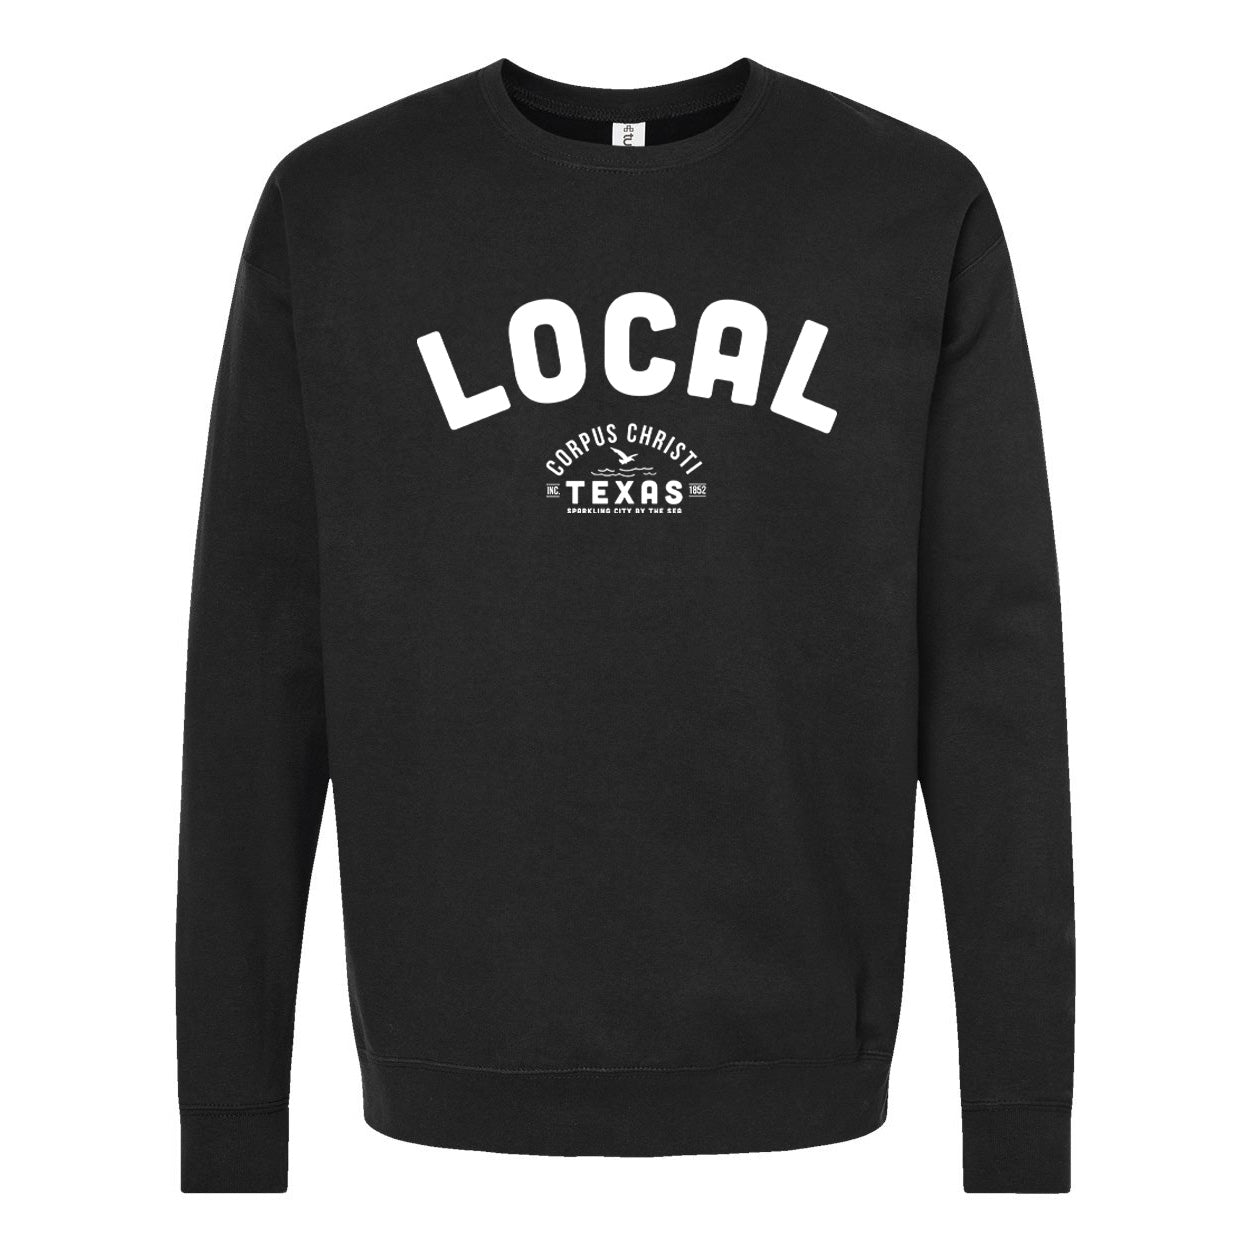 CC Local Sweatshirt